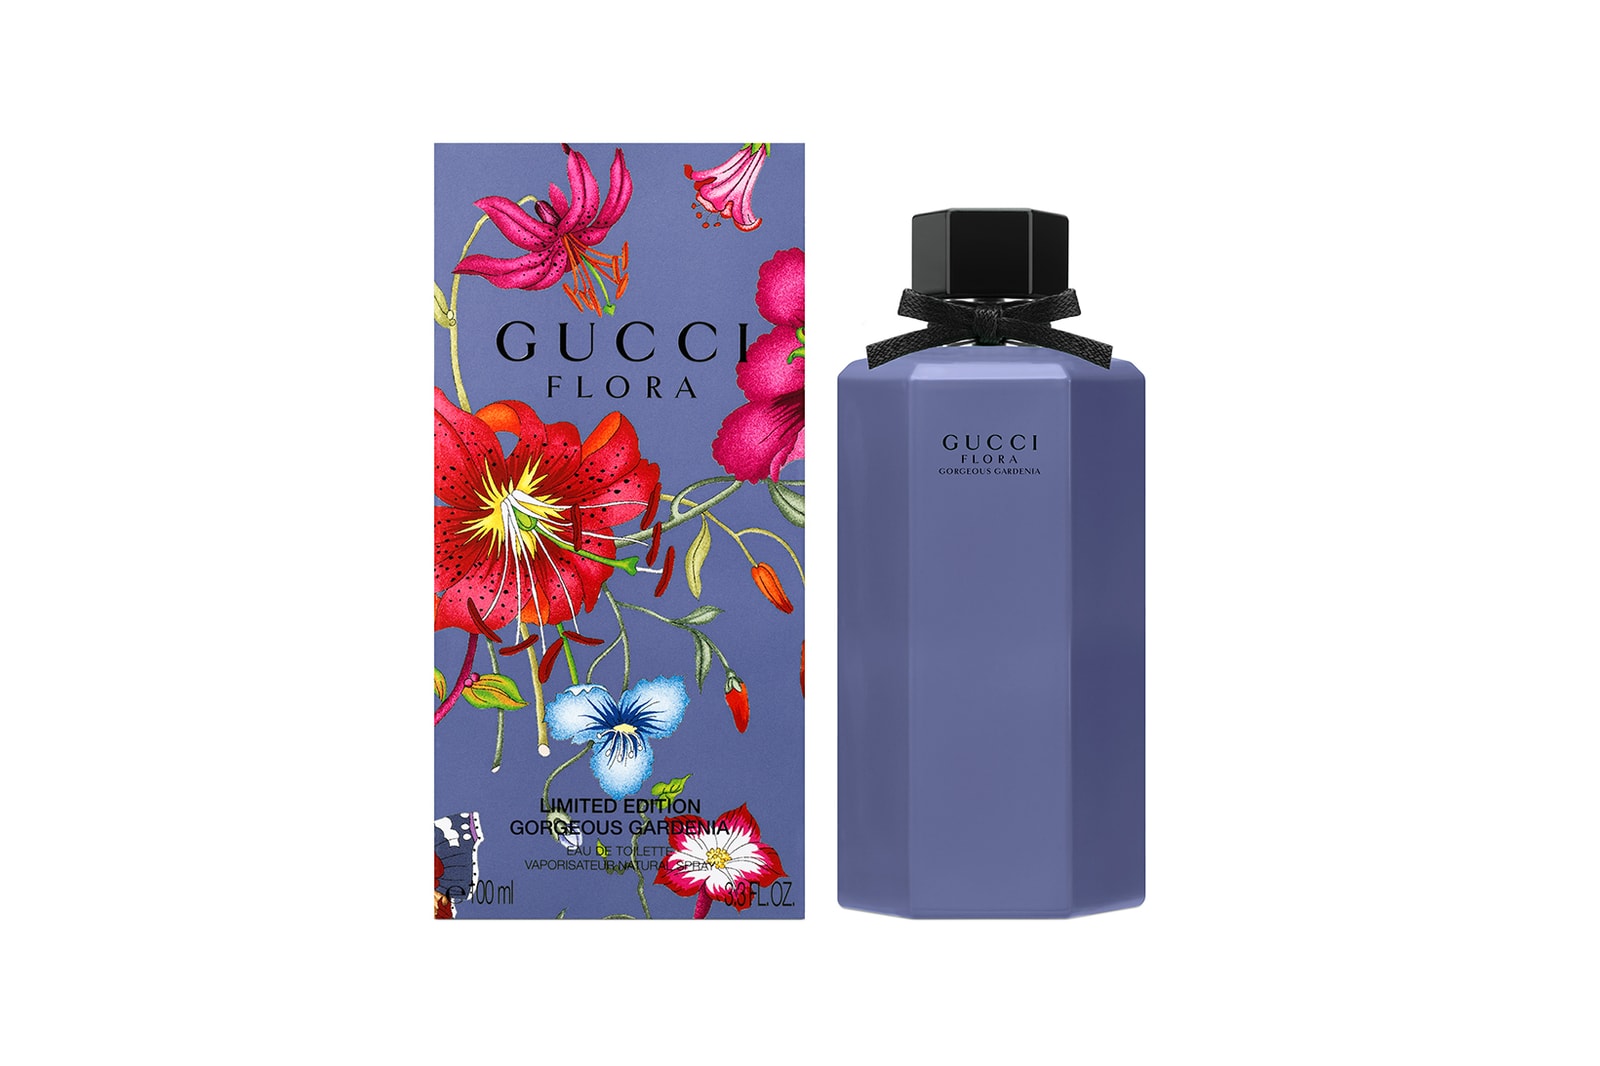 Gucci Flora Gorgeous Perfume Review |